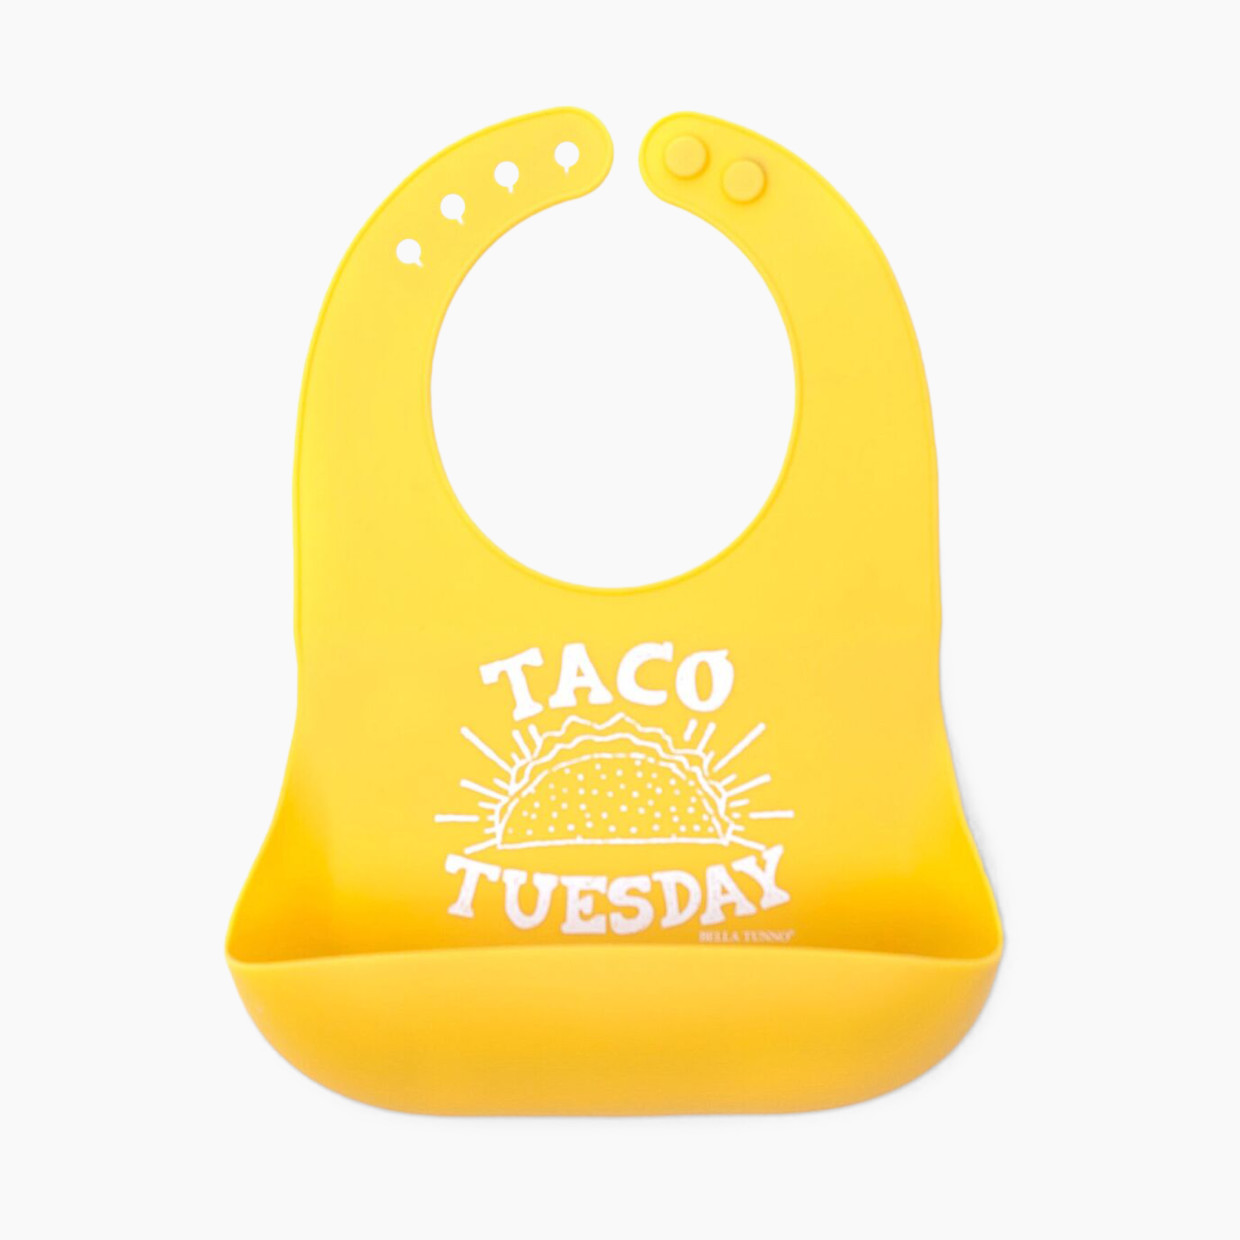 Bella Tunno Wonder Bib - Taco Tuesday.